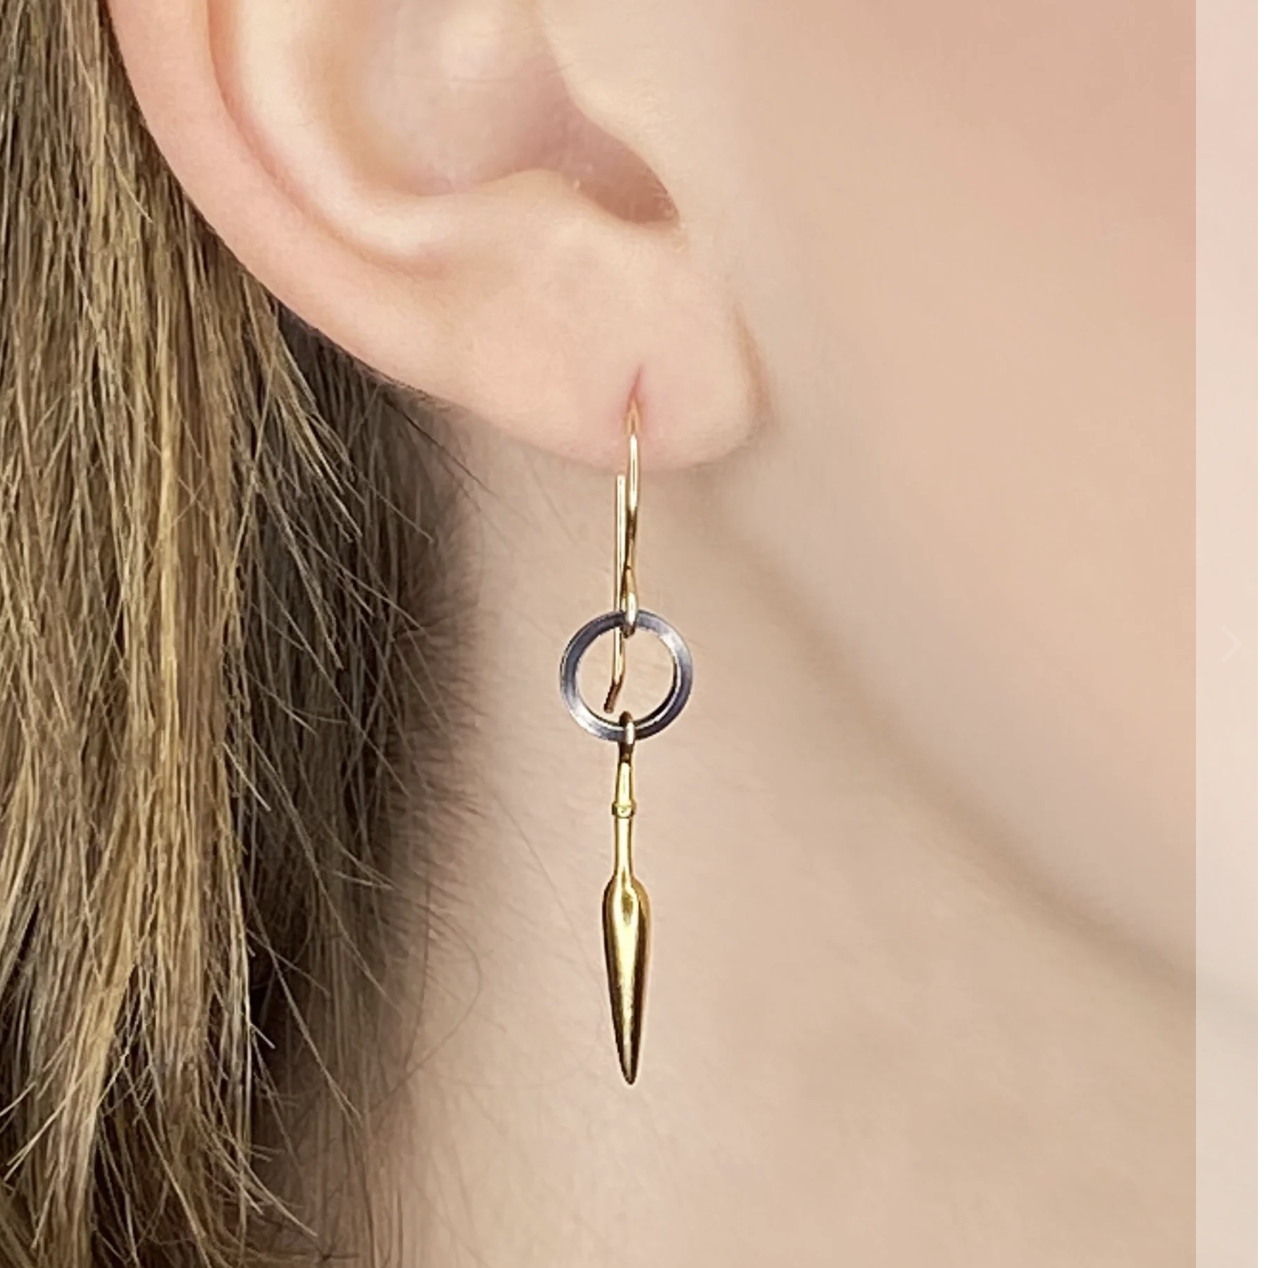 Black & Gold Spike Earrings by Q Evon